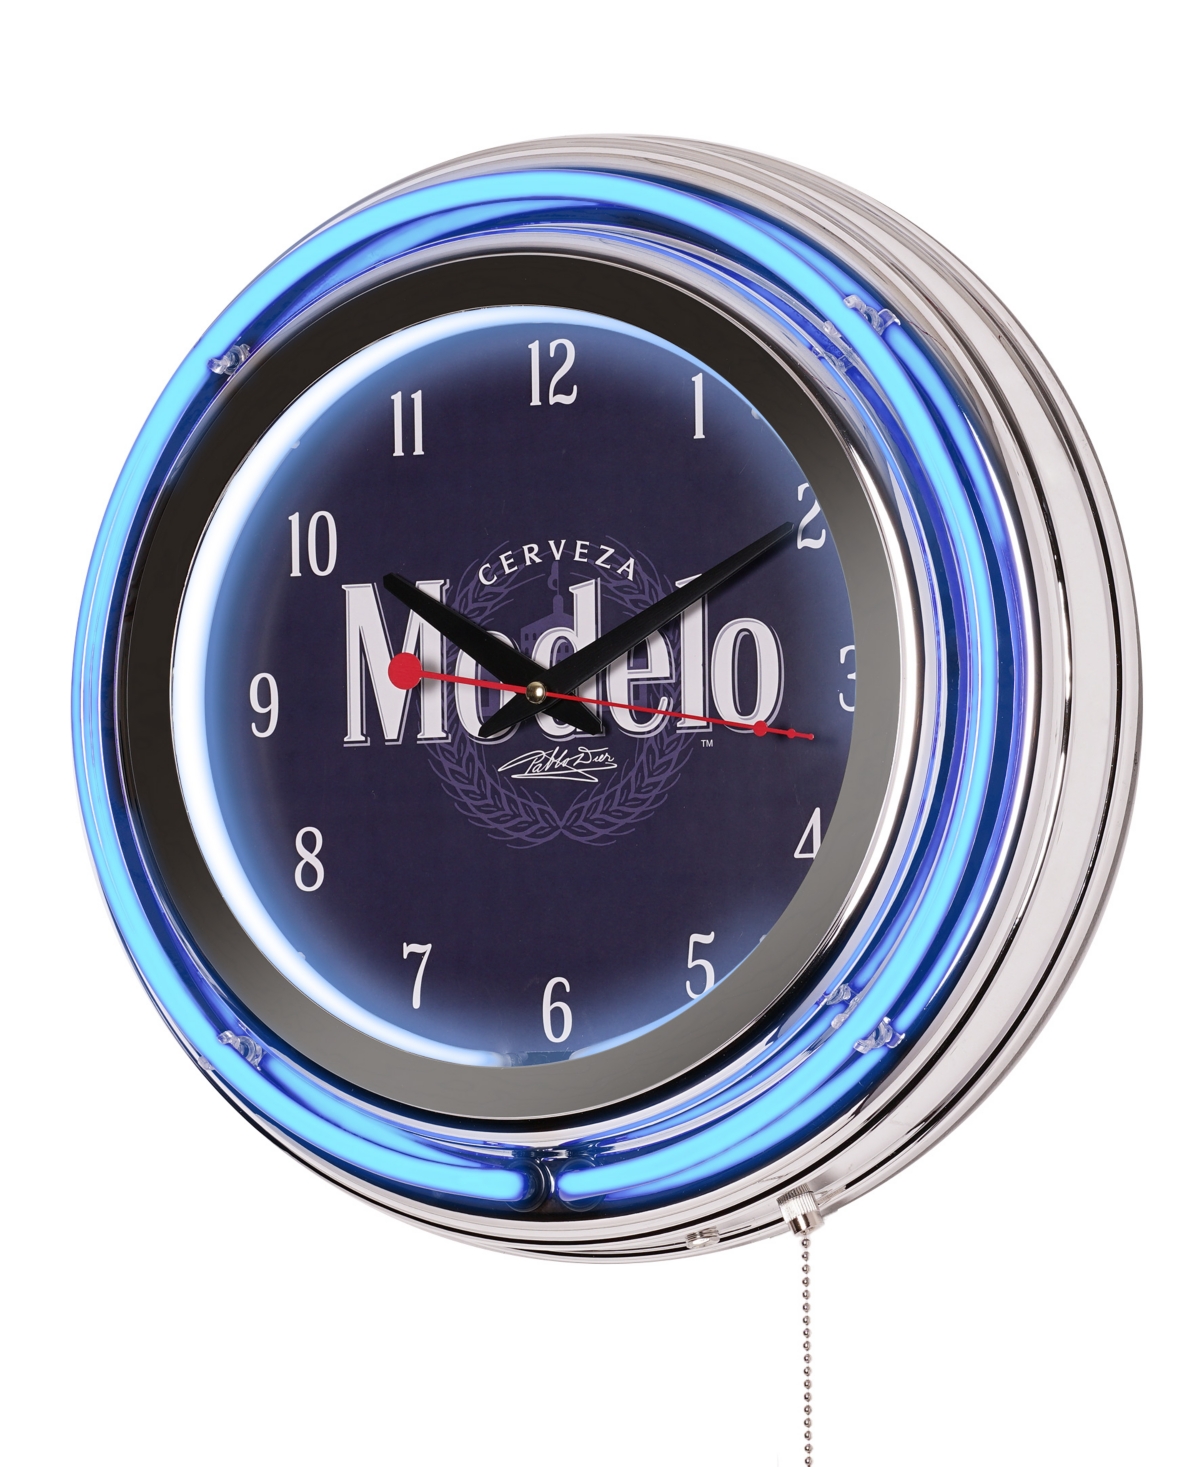 American Art Decor Modelo Retro Round Neon Wall Analog Clock With Pull Chain, 14.5" In Blue